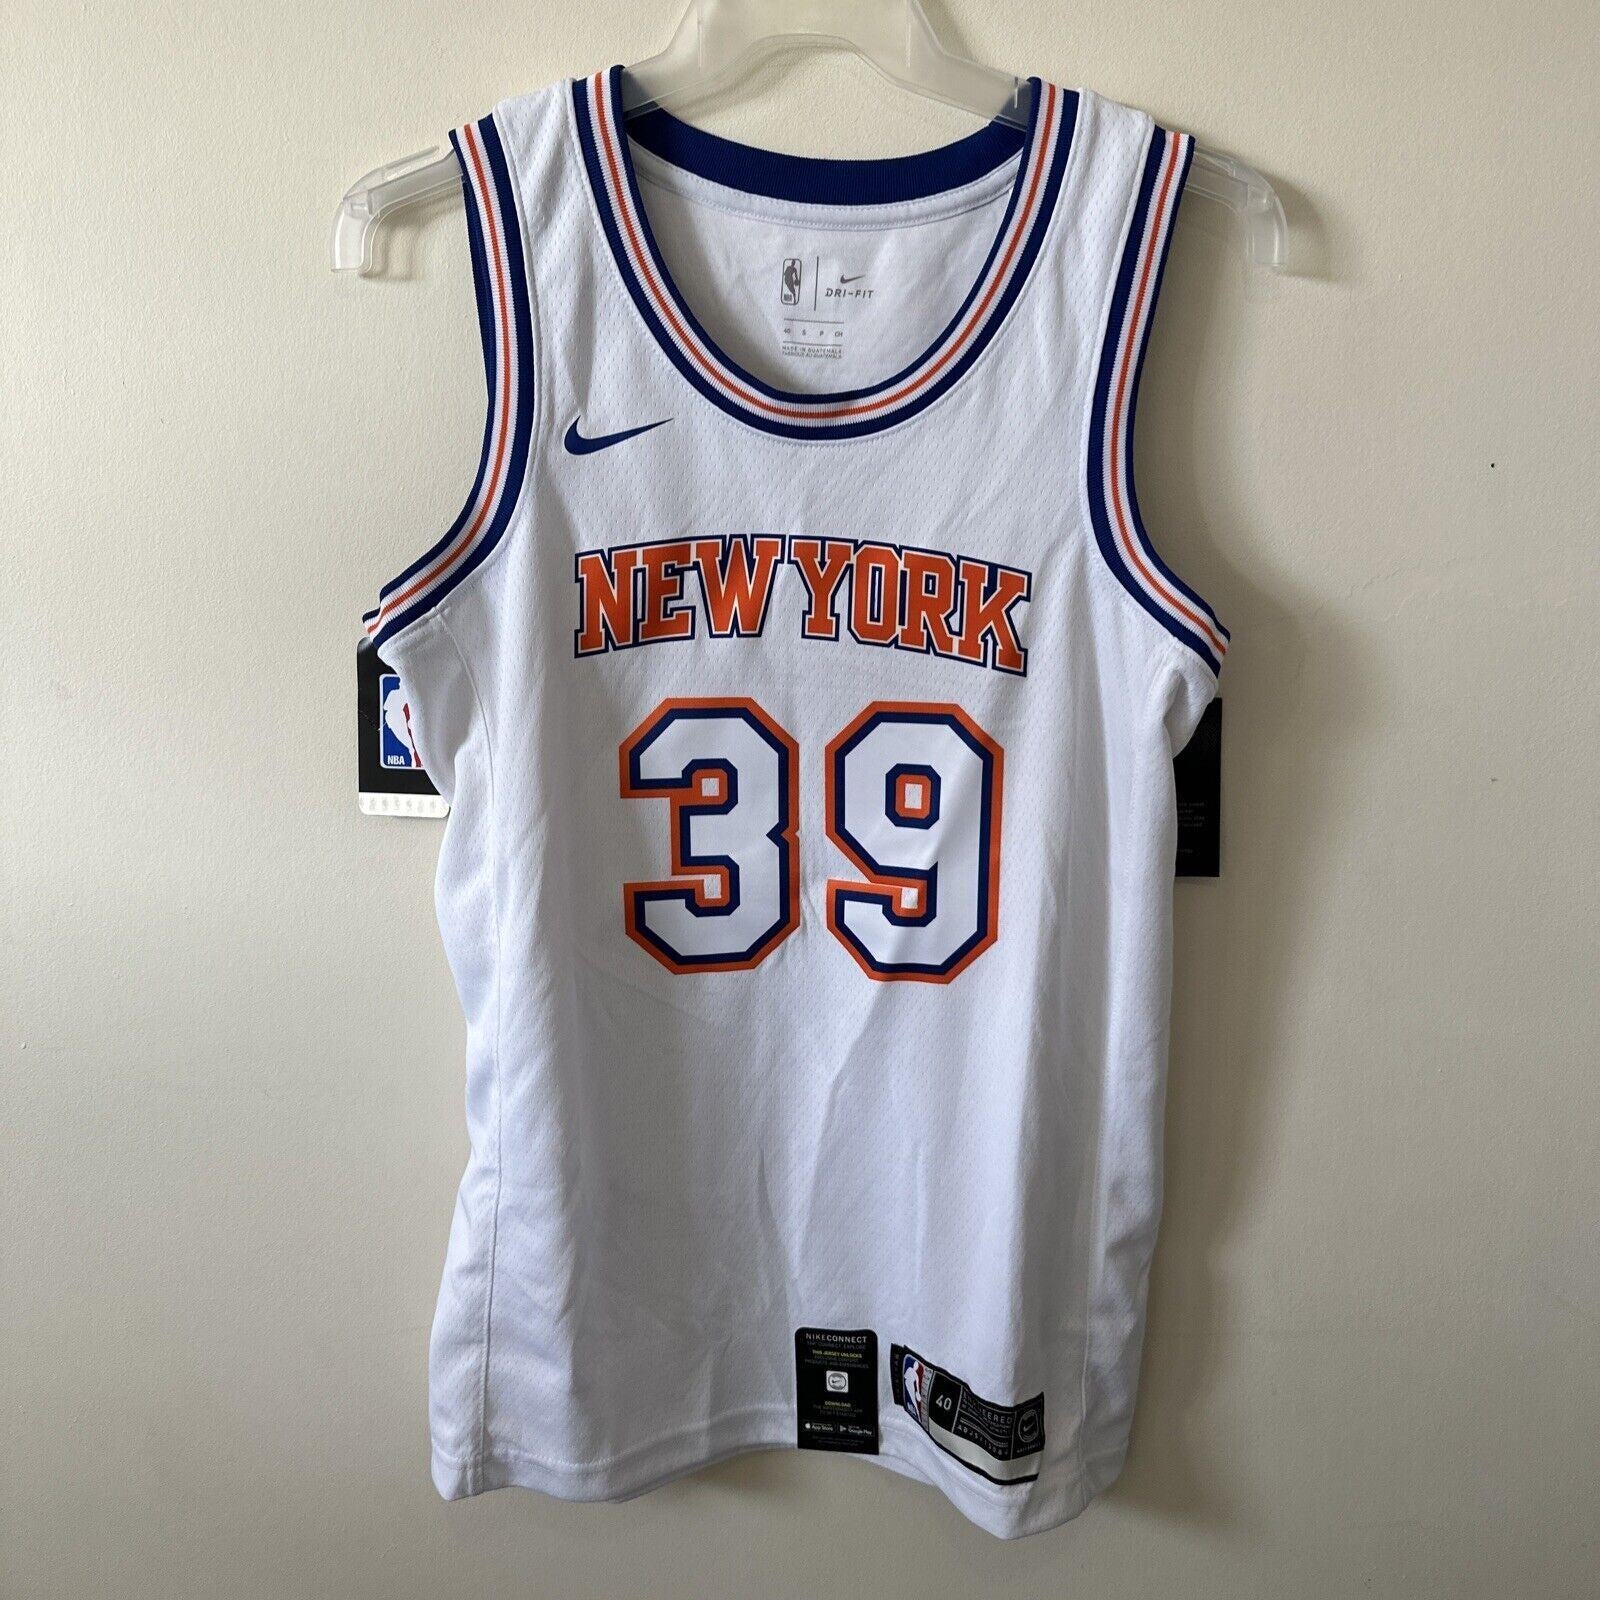 Nike NBA New York Knicks Swingman Edition Jersey EDWARDS 39 Men’s Small